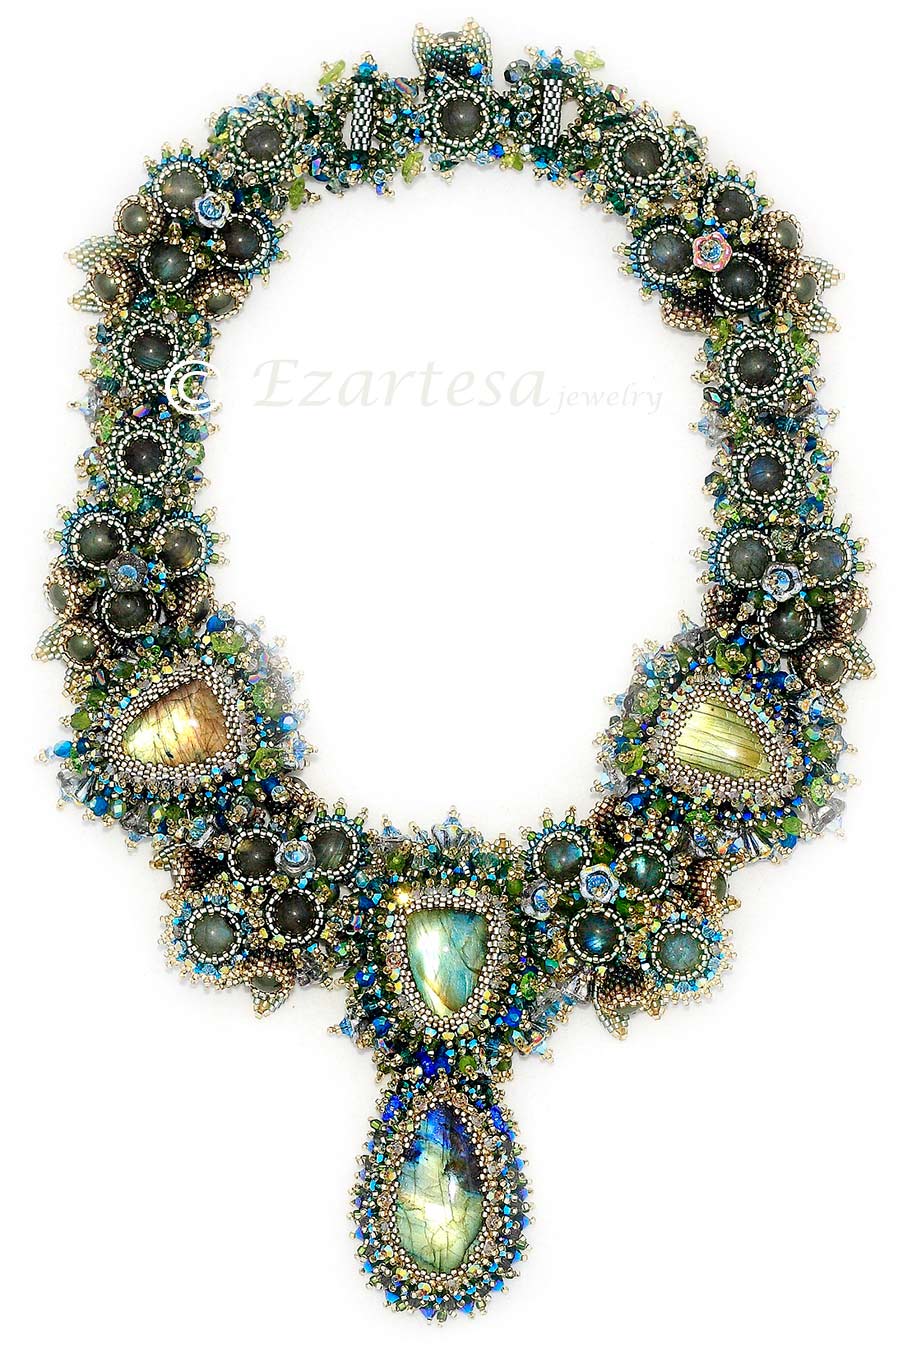 Labradorite gemstone beaded necklace aquarius zodiac sign gemstone © Ezartesa design https://ezartesa.com